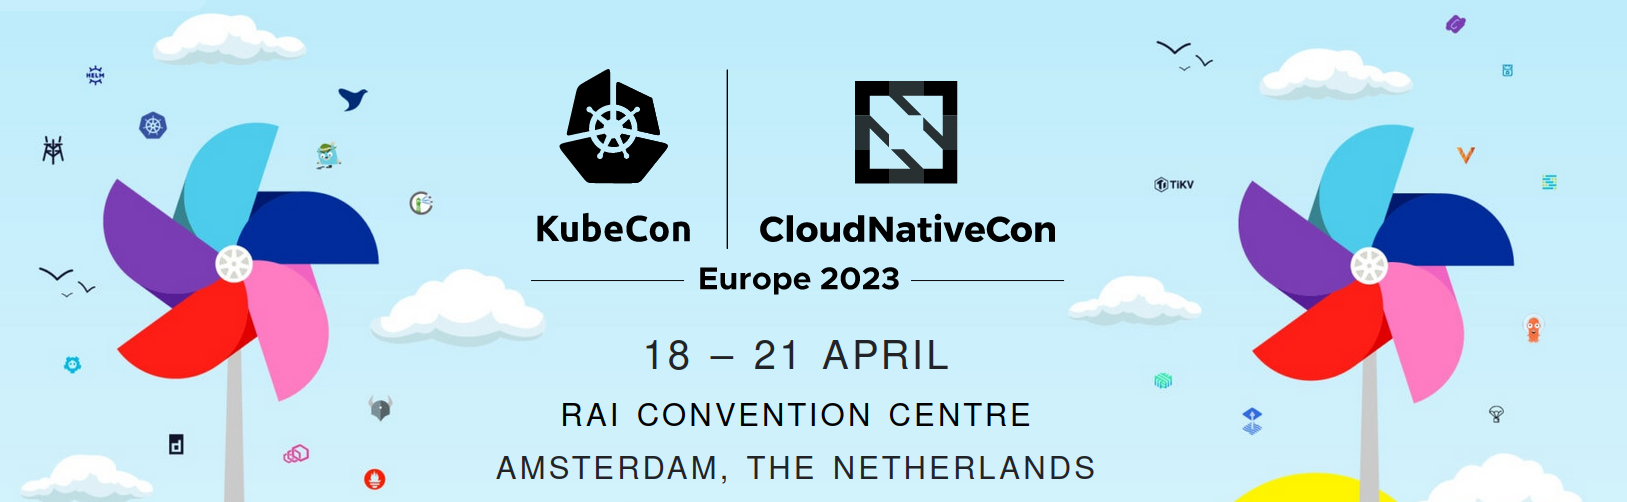 CloudNativeCon / KubeCon EU 2023